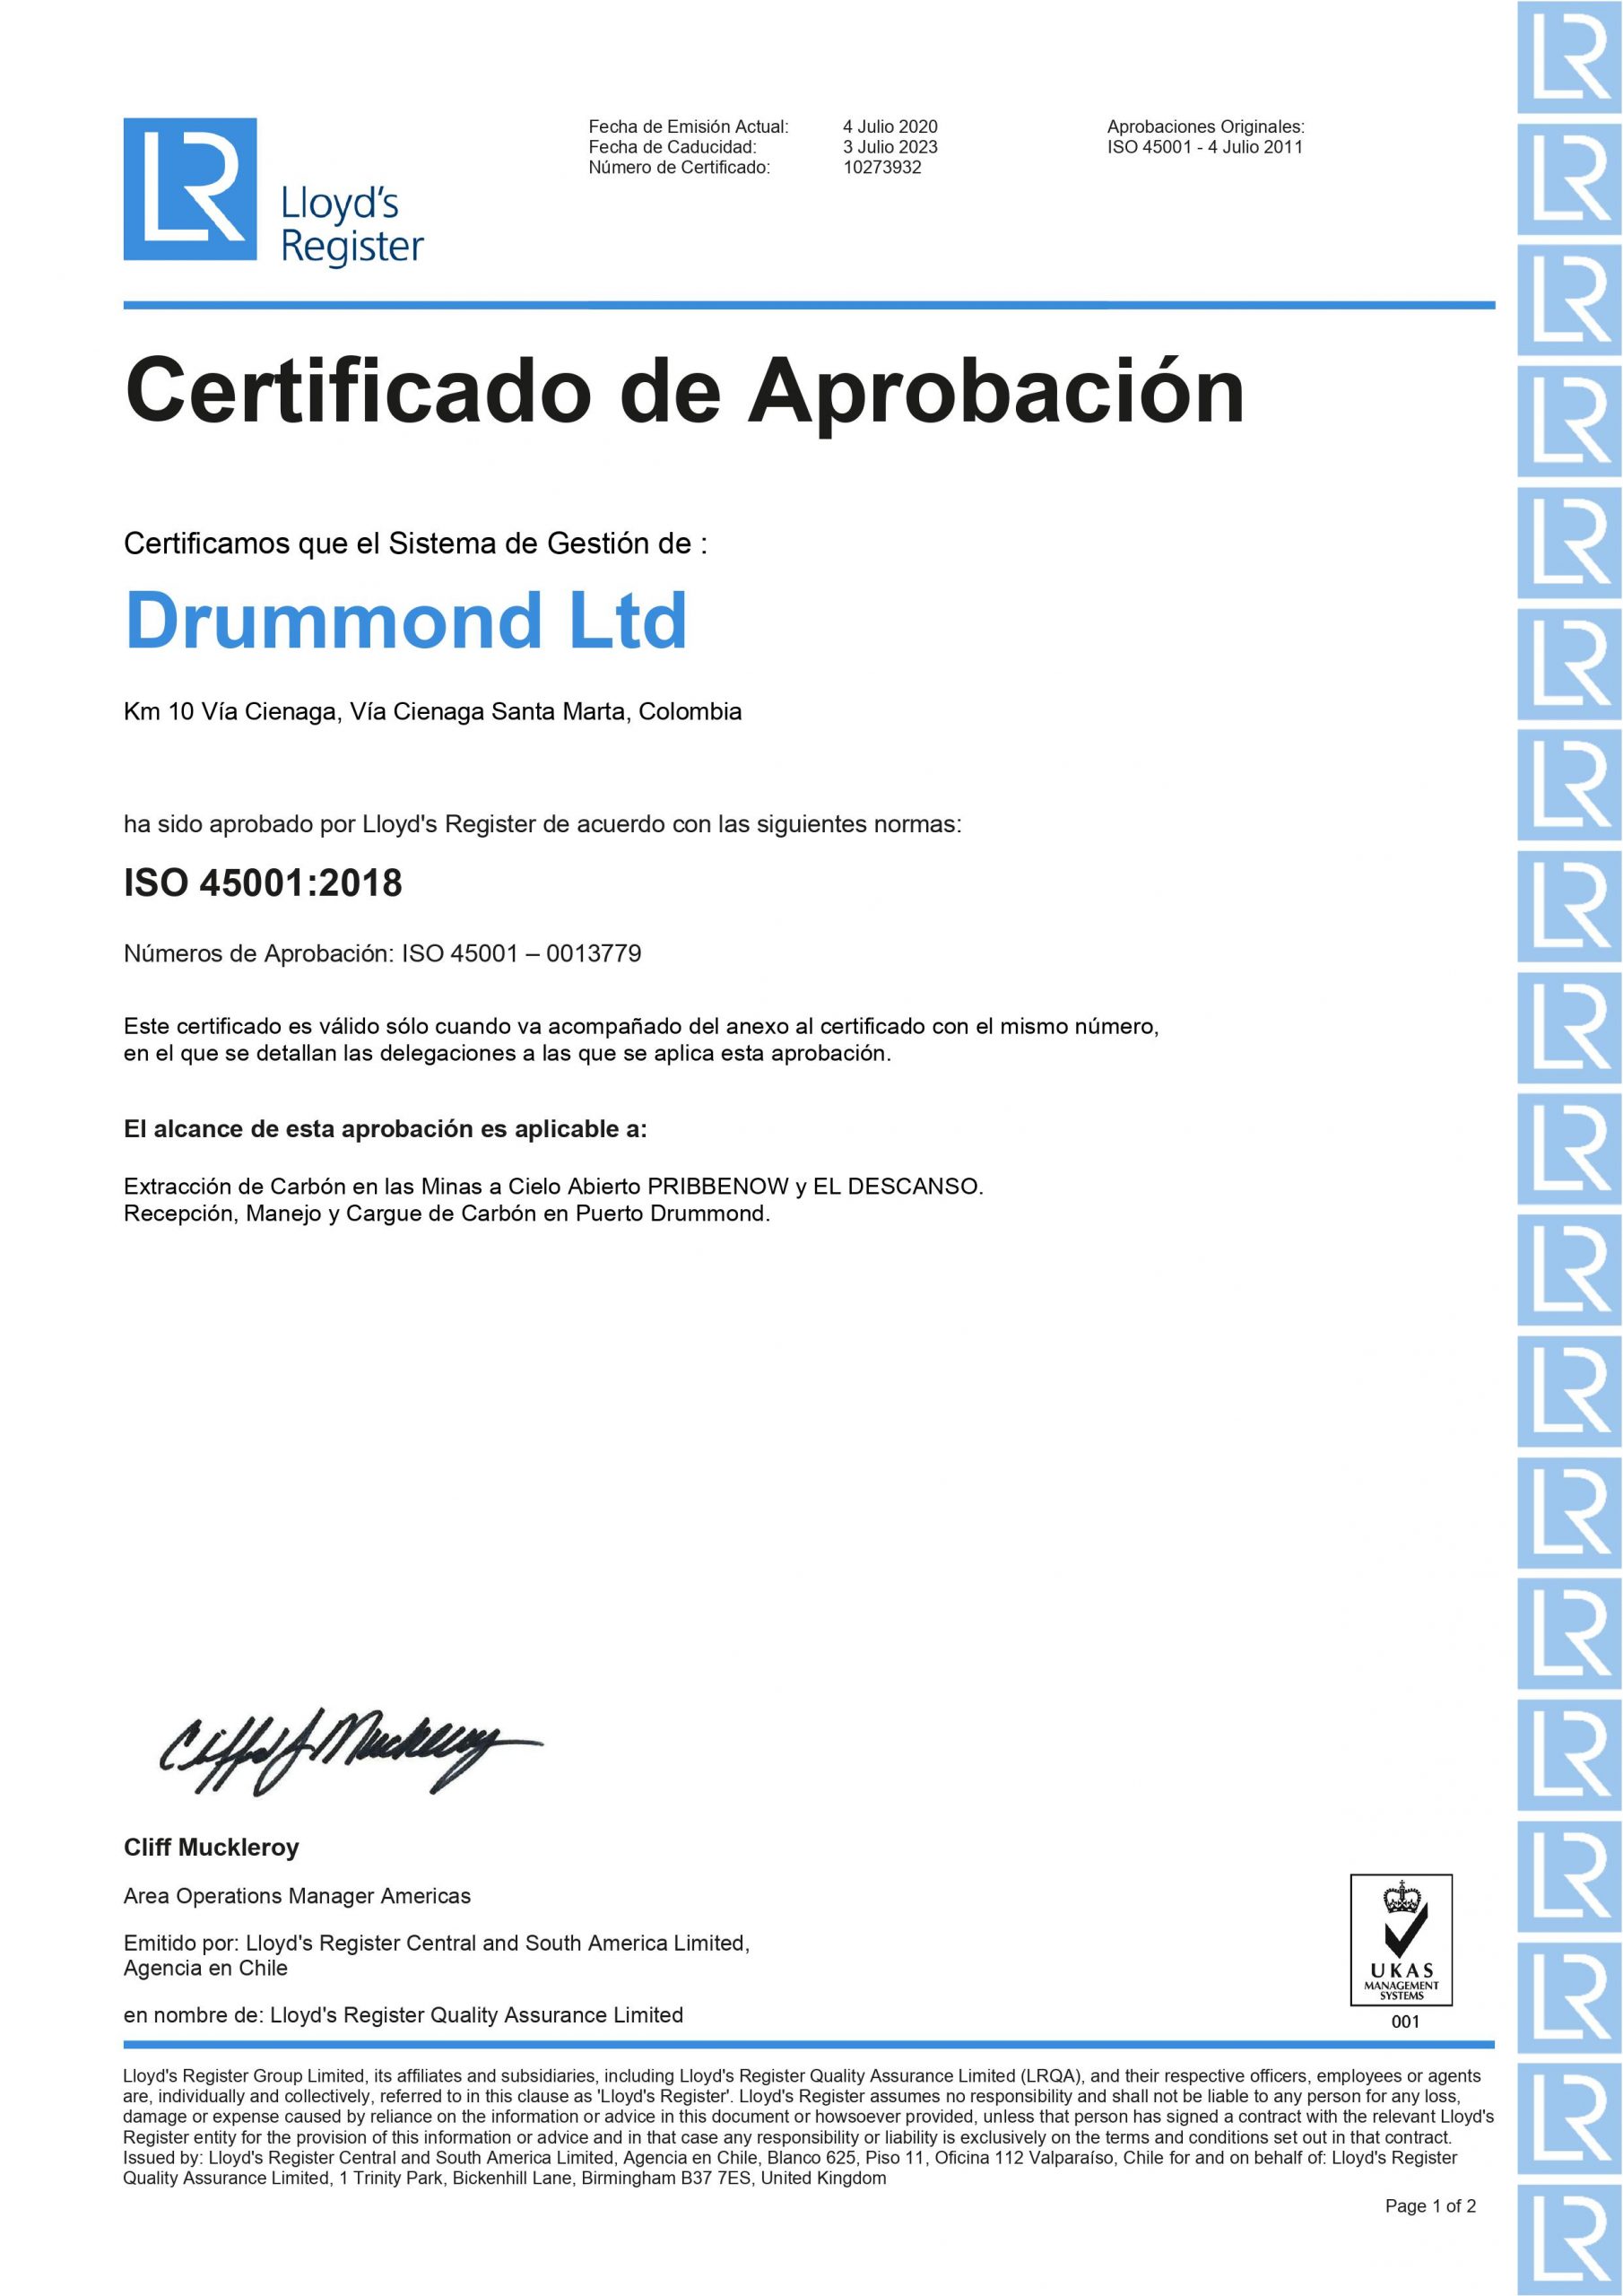 Certificado de aprobacin ISO 45001 2018 Lloyds Register 1 scaled